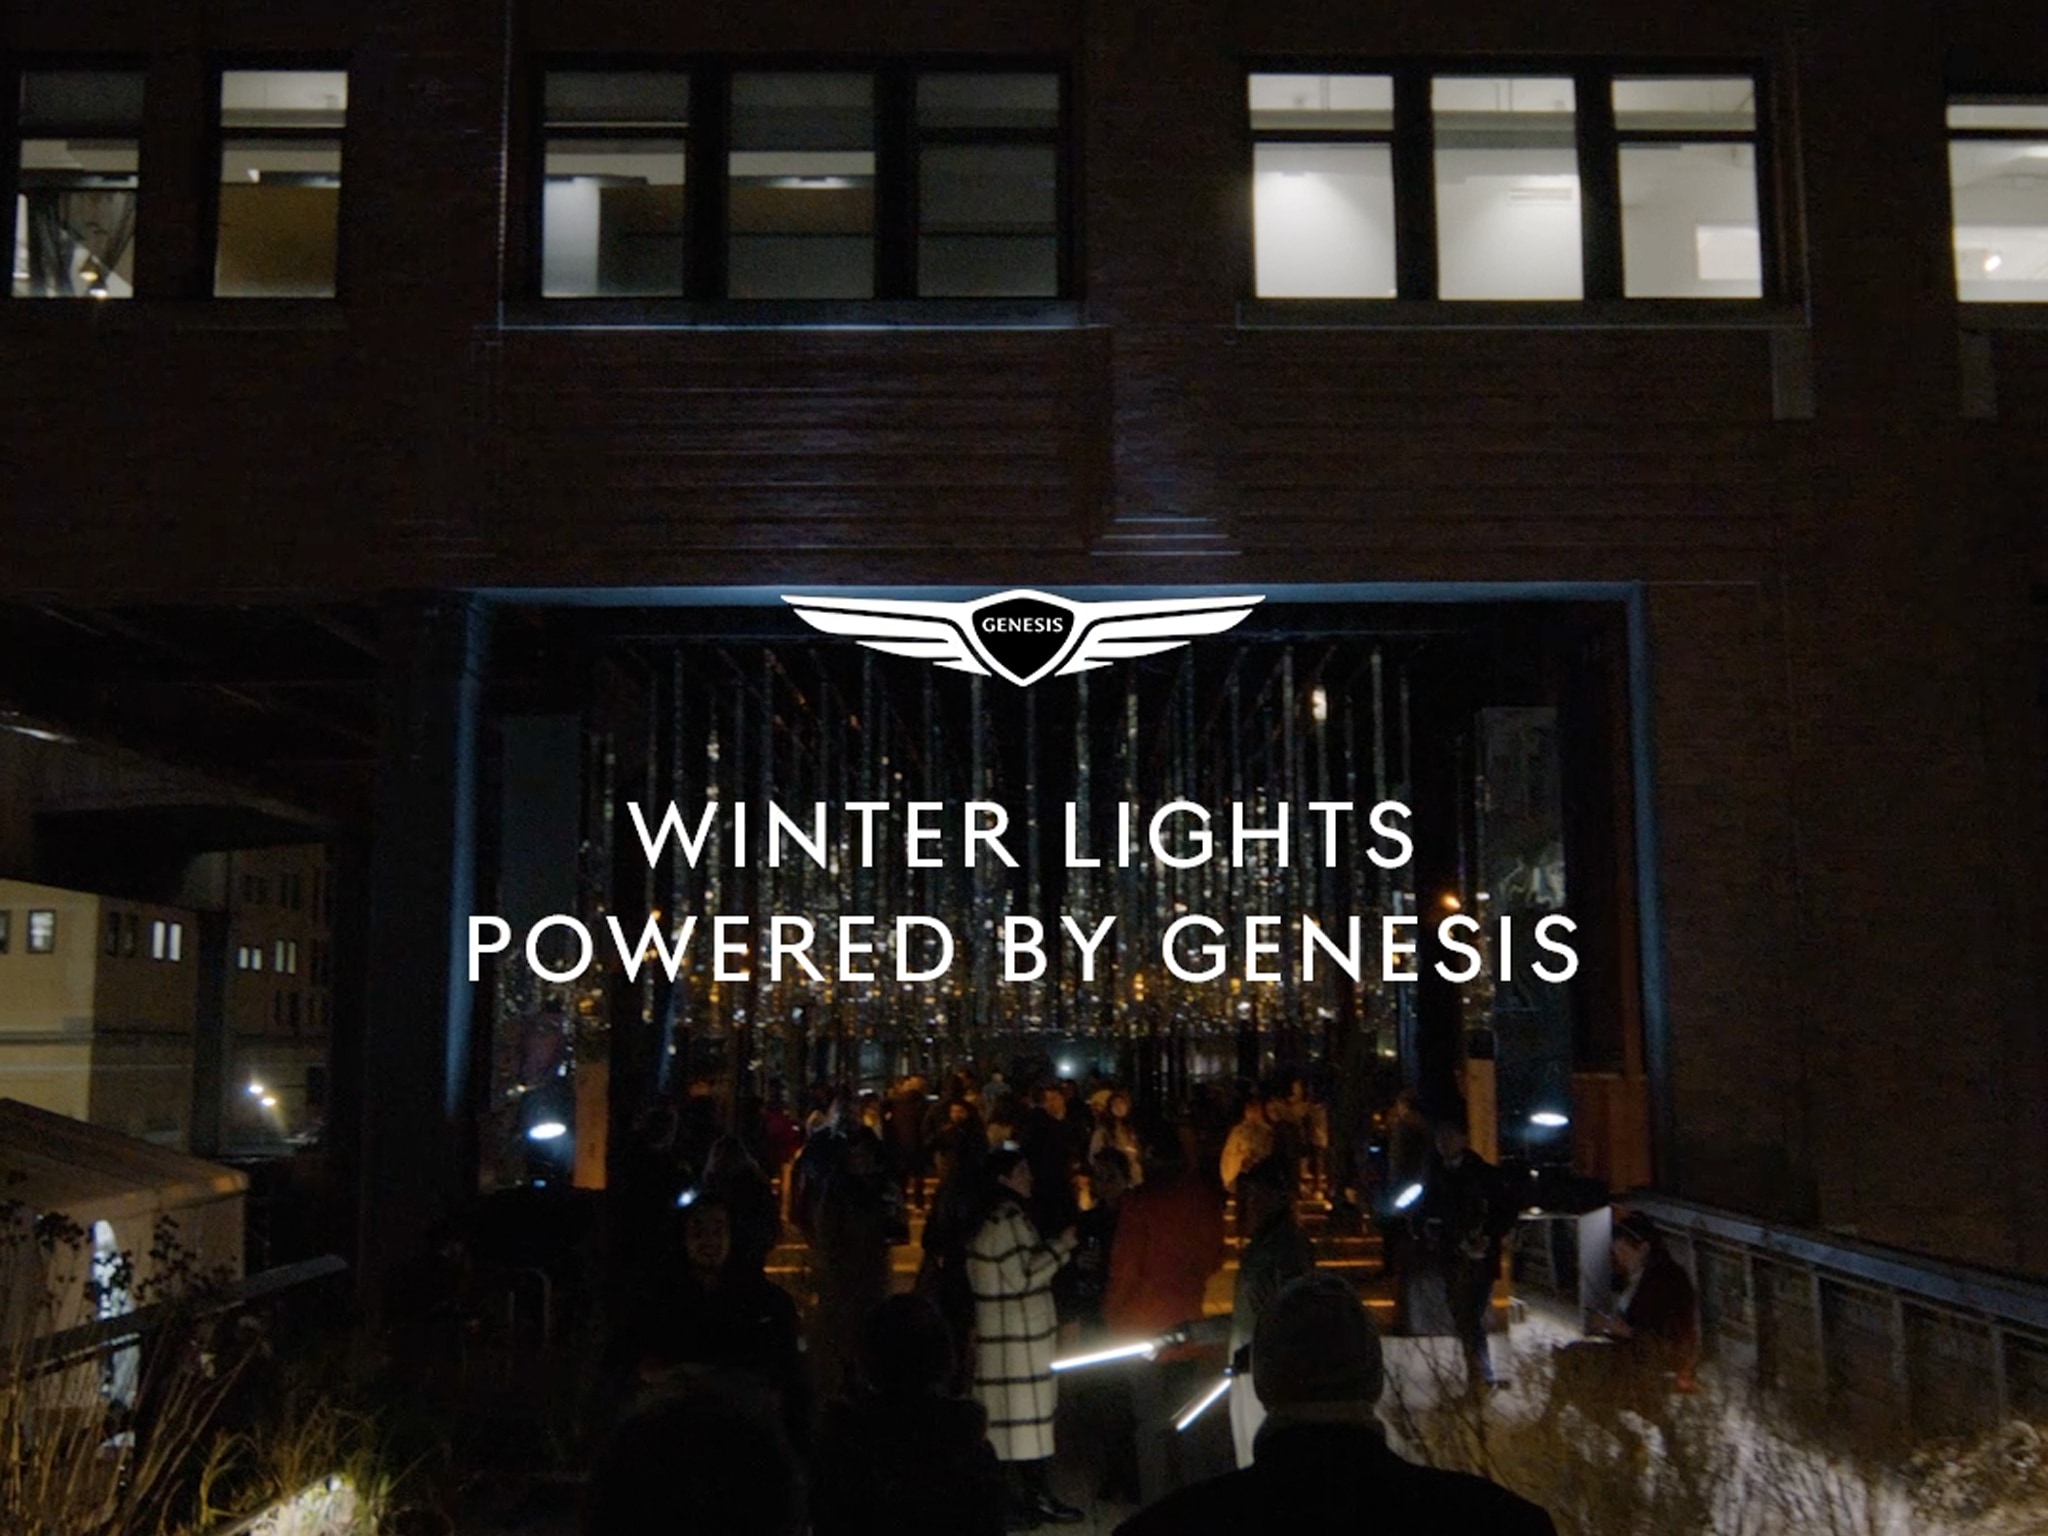 Winter Lights powered by Genesis